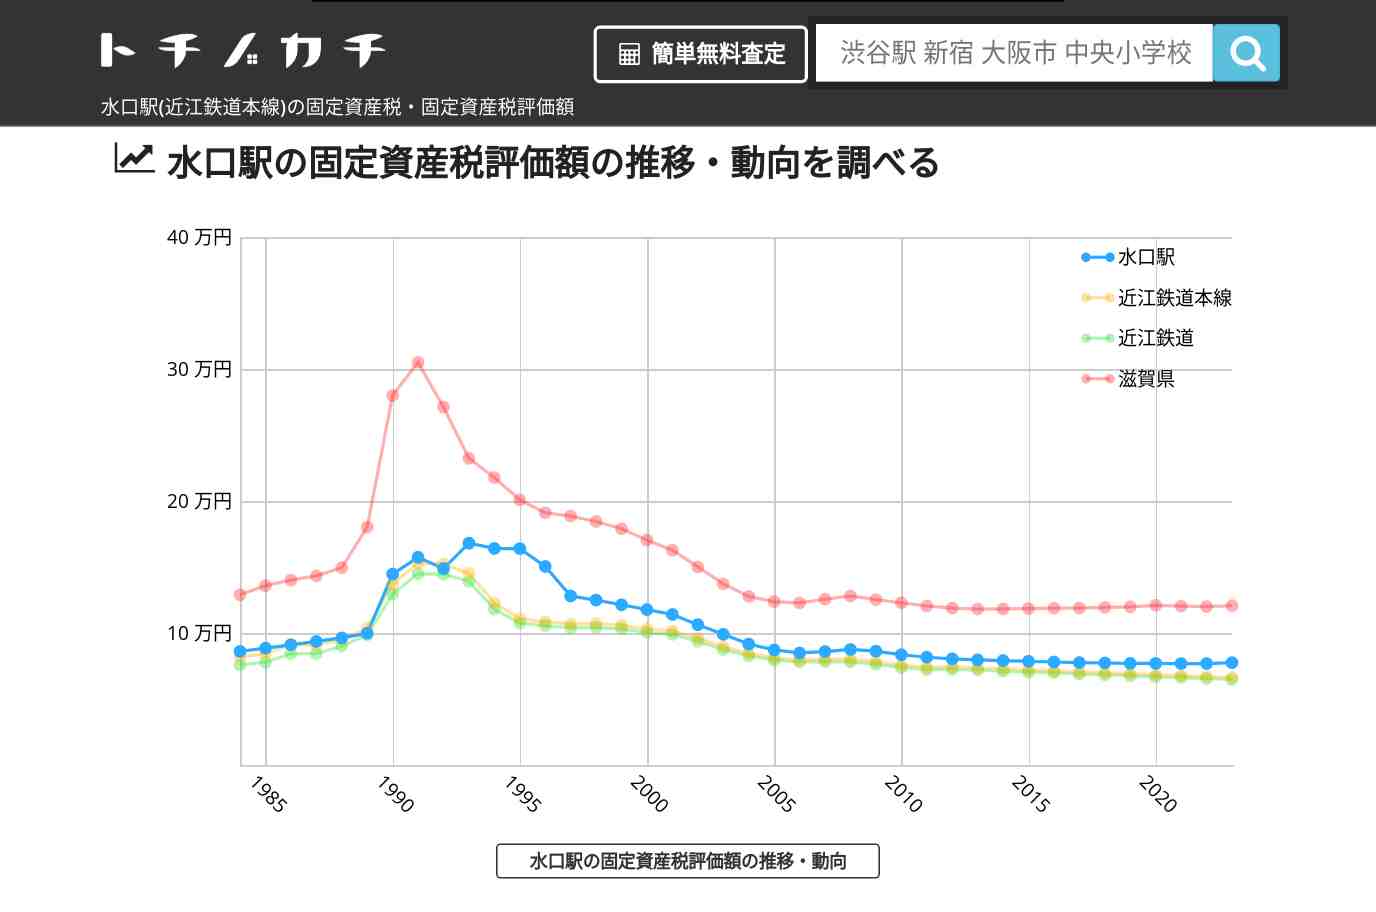 水口駅(近江鉄道本線)の固定資産税・固定資産税評価額 | トチノカチ